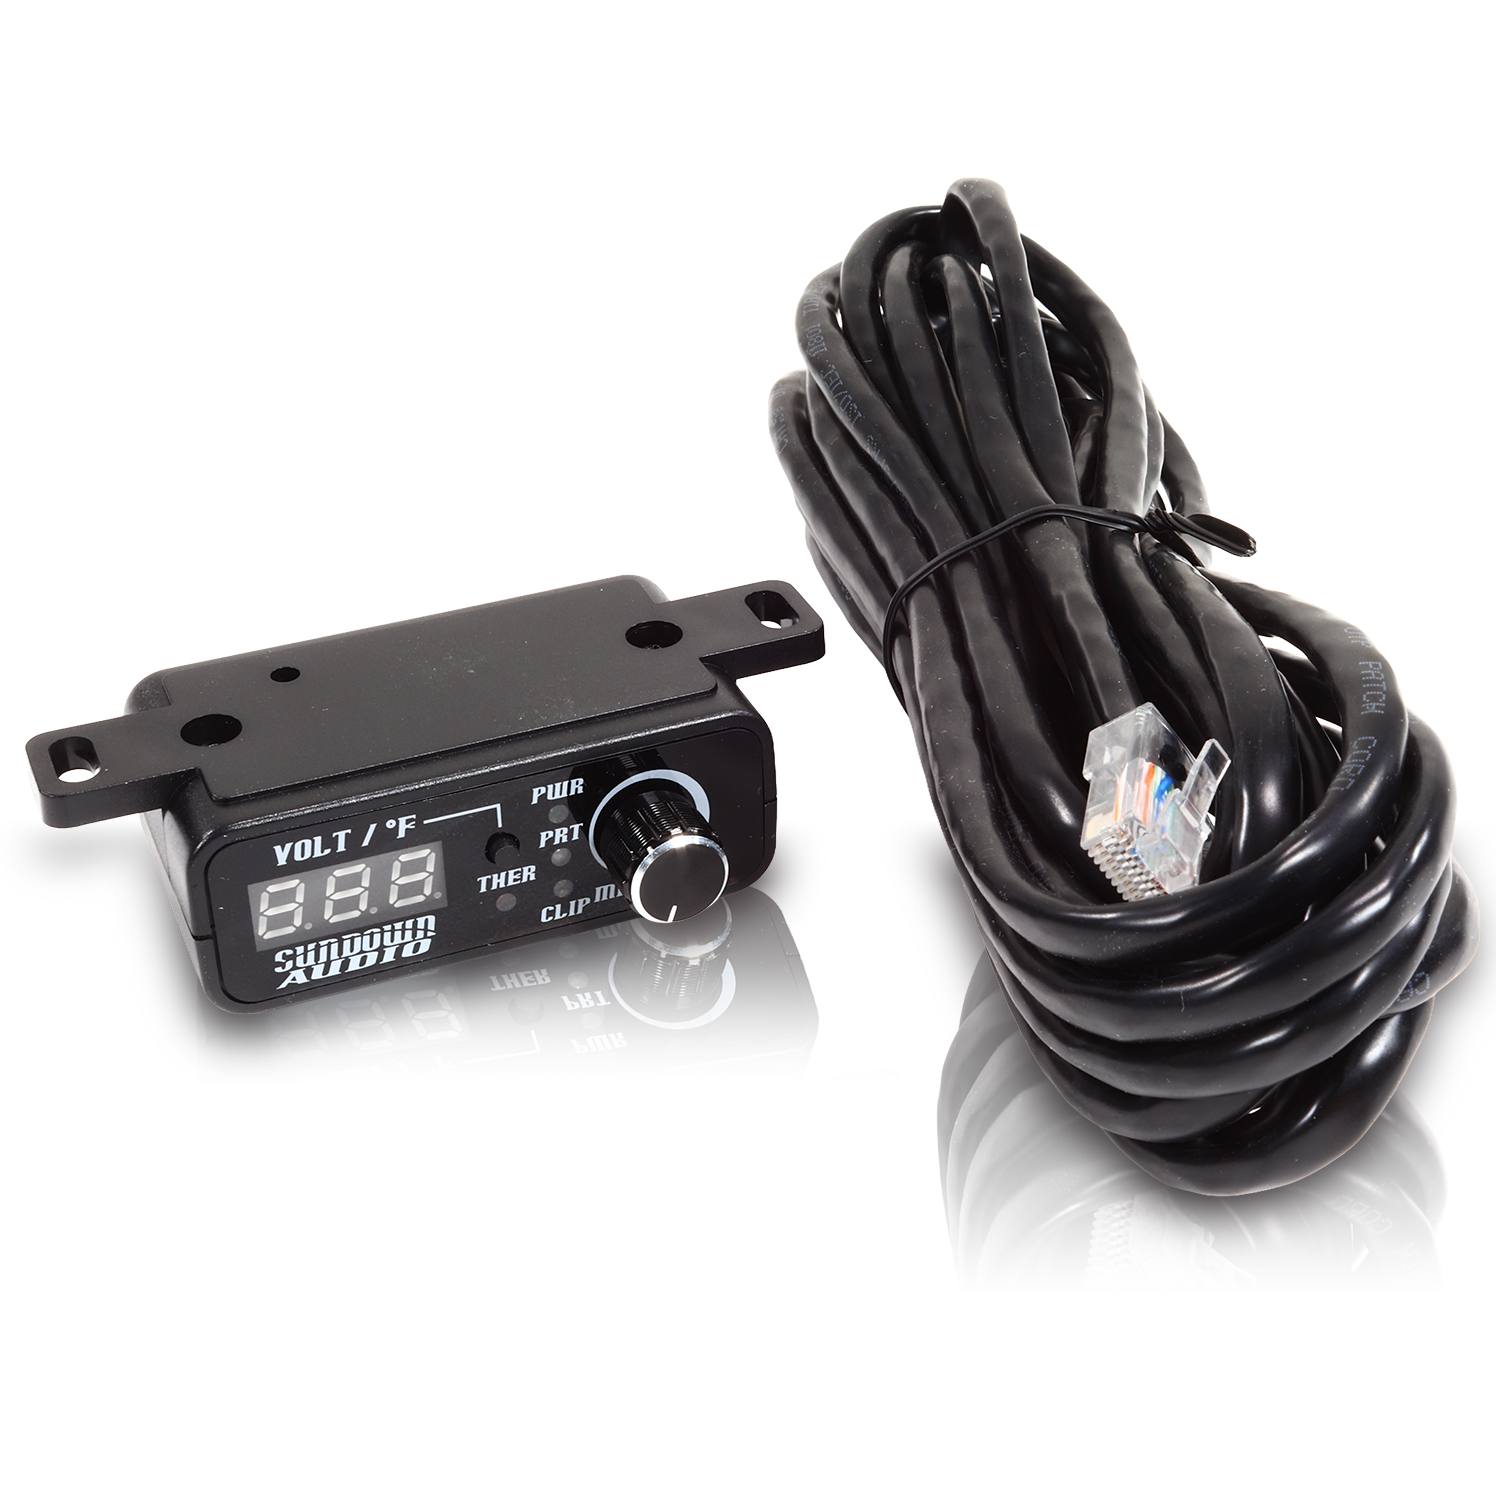 Sundown Audio SALT-8 Class D Monoblock Car Amplifier 8000 Watts @ 1-Ohm